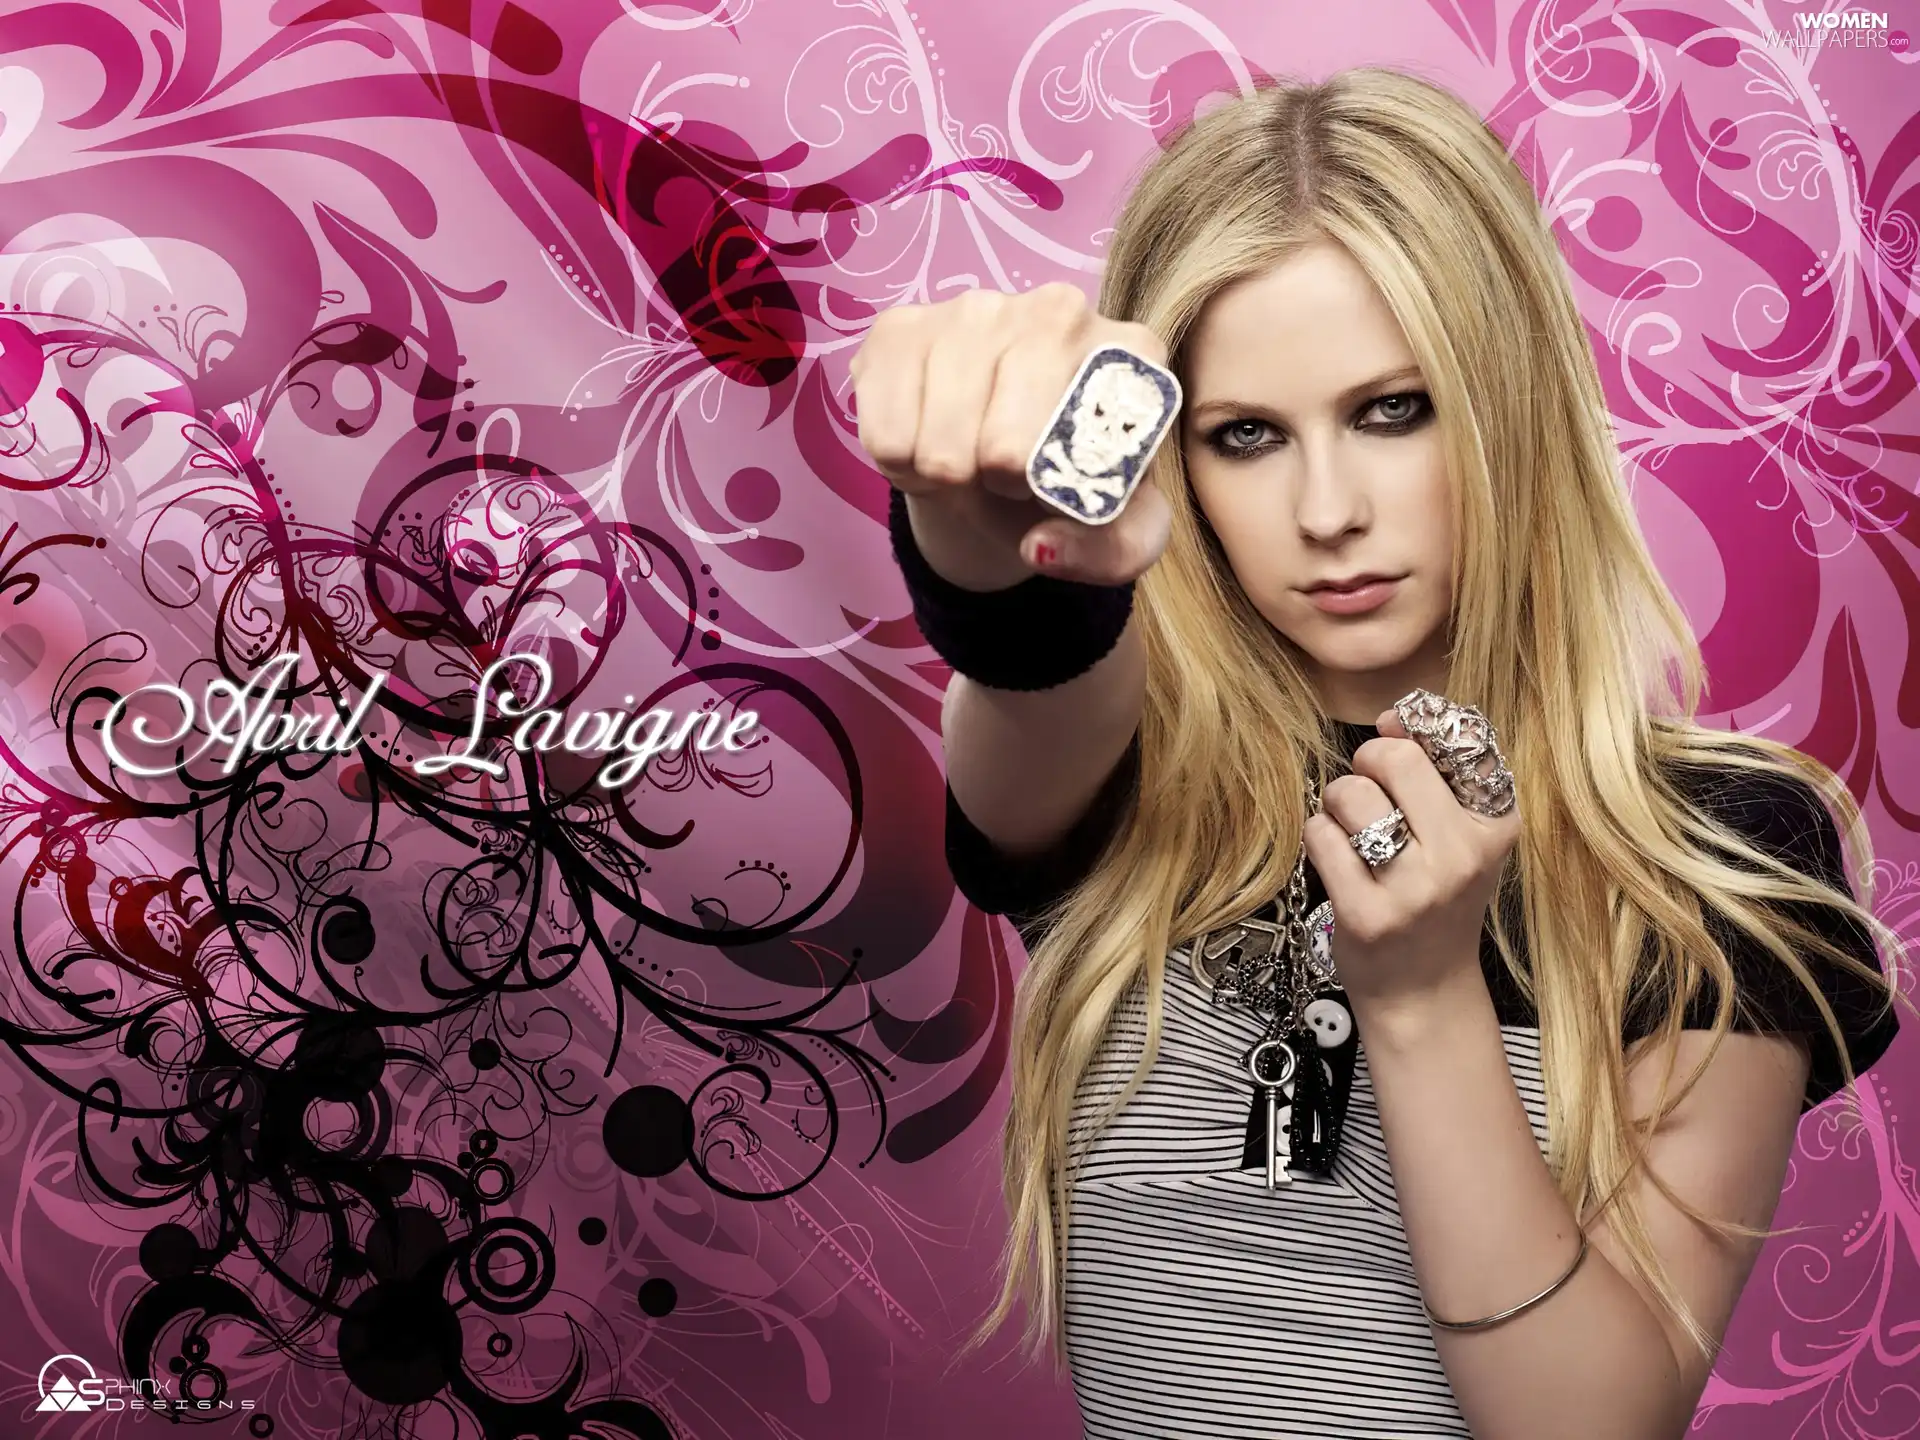 lectern, Avril Lavigne, an